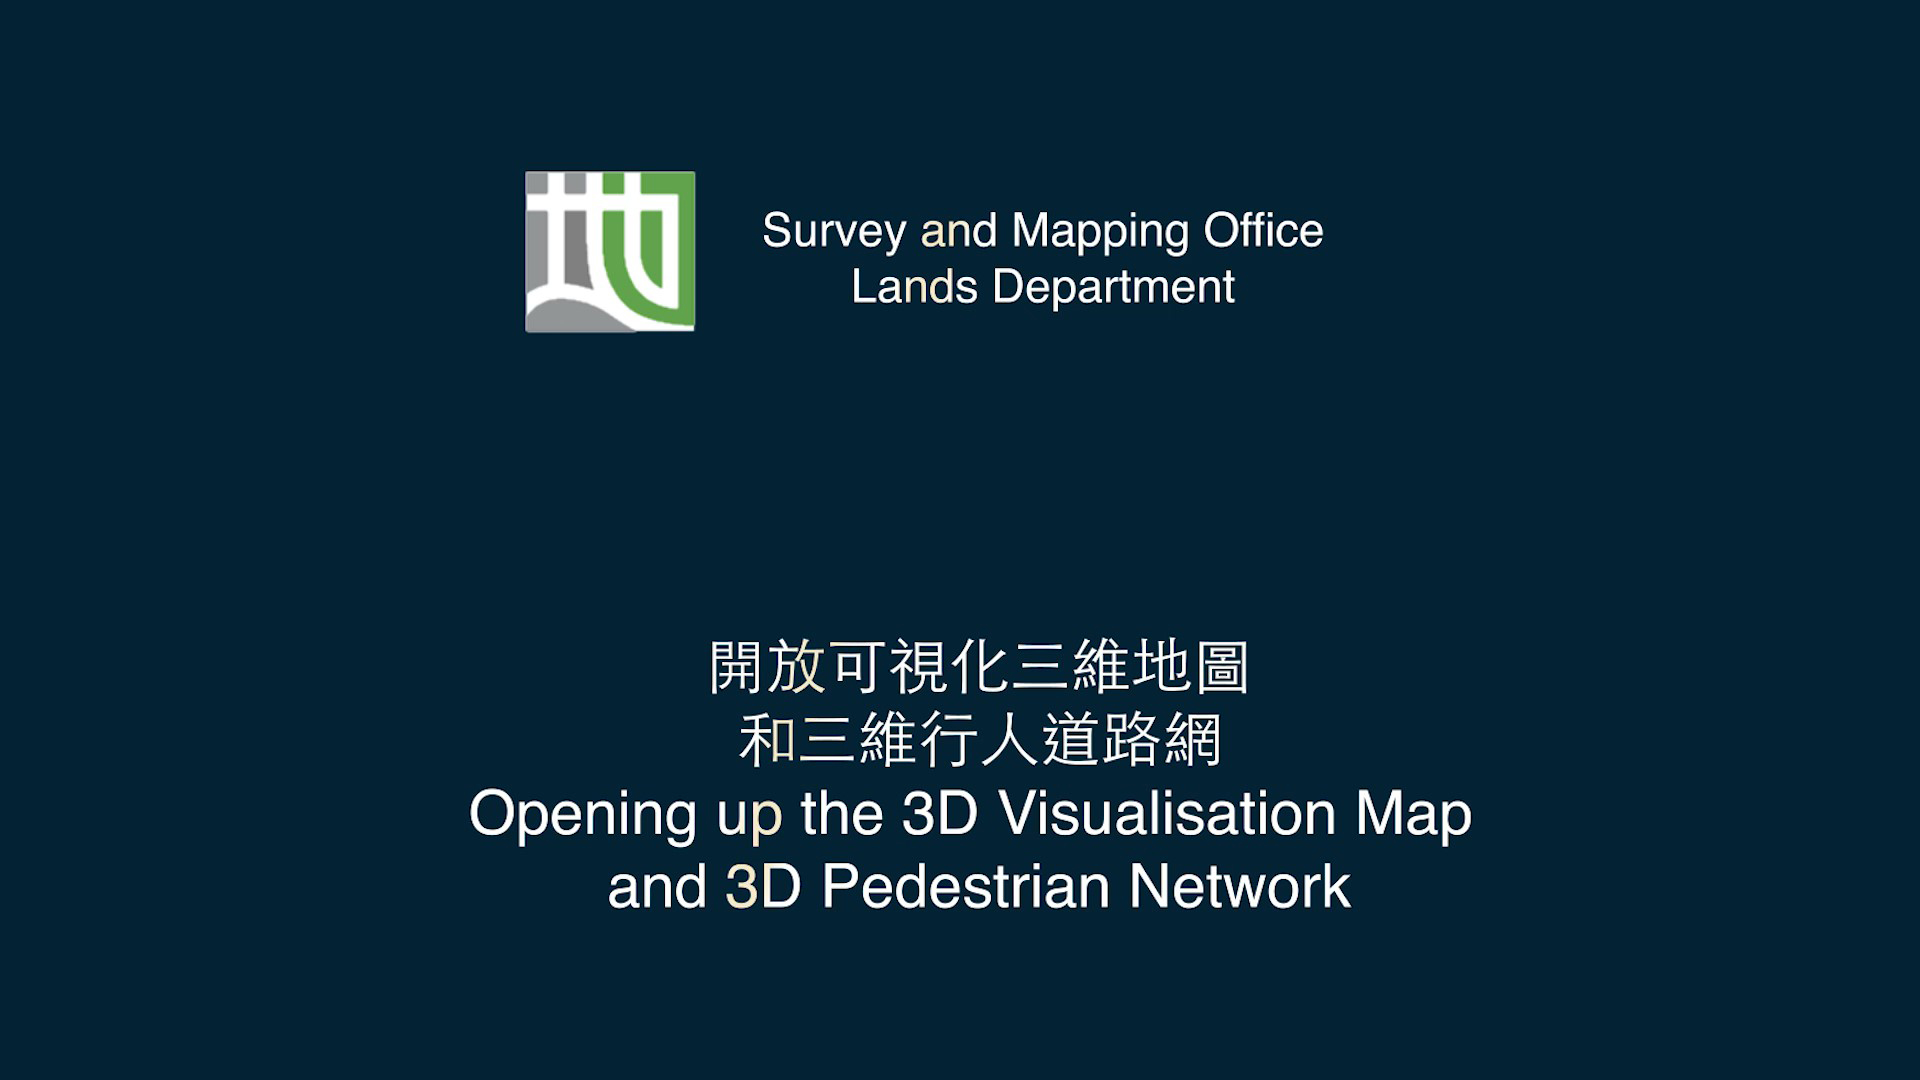 3D Pedestrian Network and 3D Visualisation Map (2017)